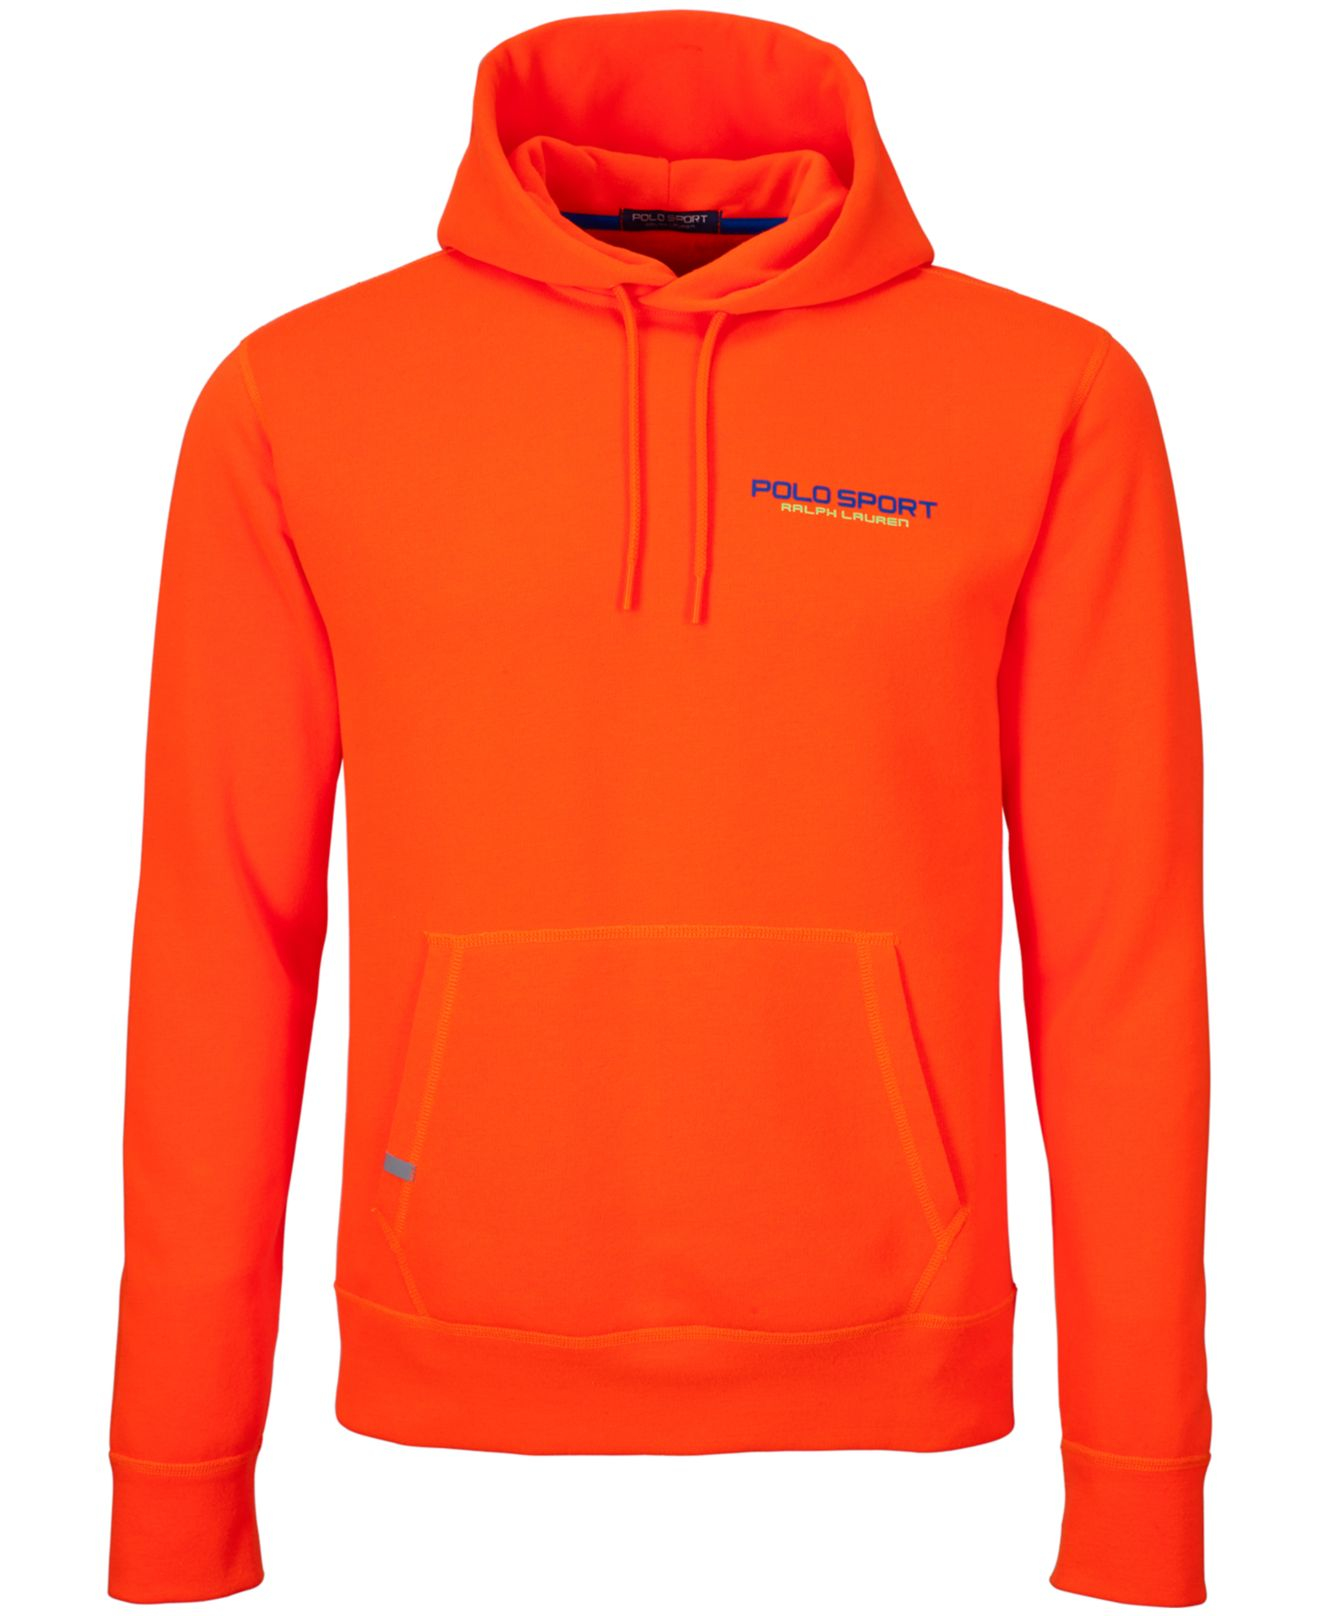 Polo ralph lauren Polo Sport Neon Fleece Pullover Hoodie in Orange for